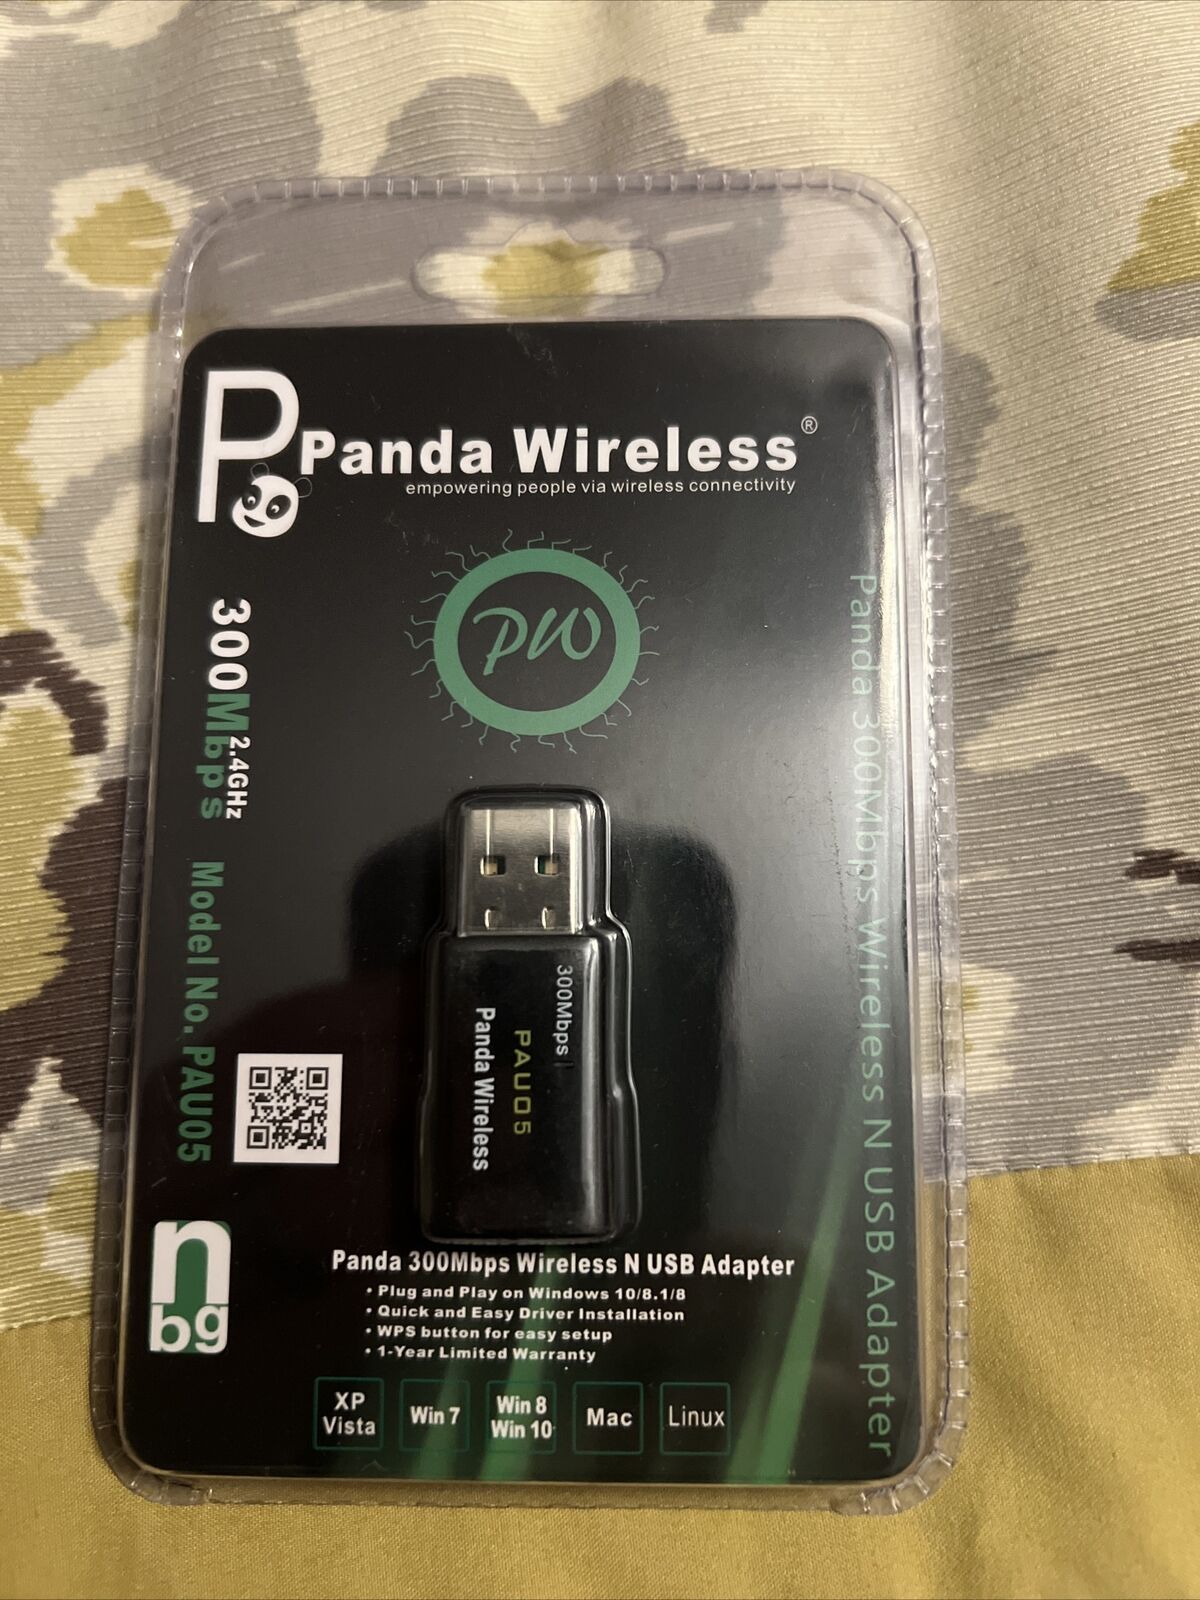 Panda 300mbps Wireless N USB Adapter